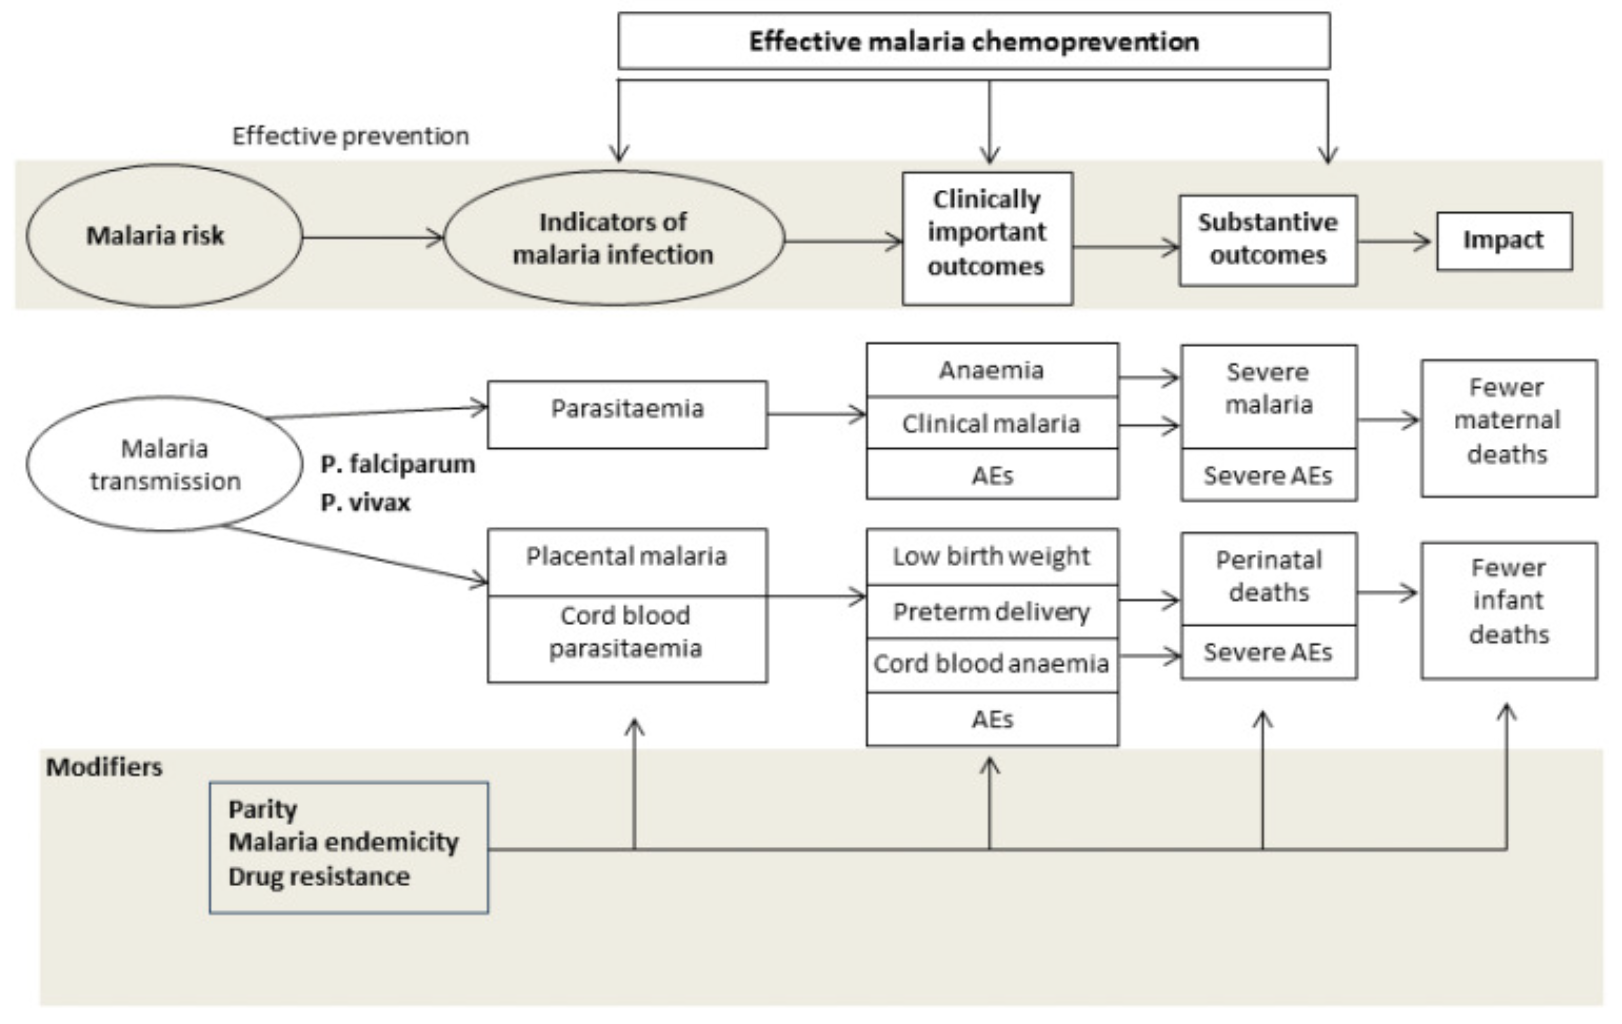 Drugs for preventing malaria in pregnancy: conceptual framework. Source: @radevapetrova:2014, http://bit.ly/1U3q2Oj